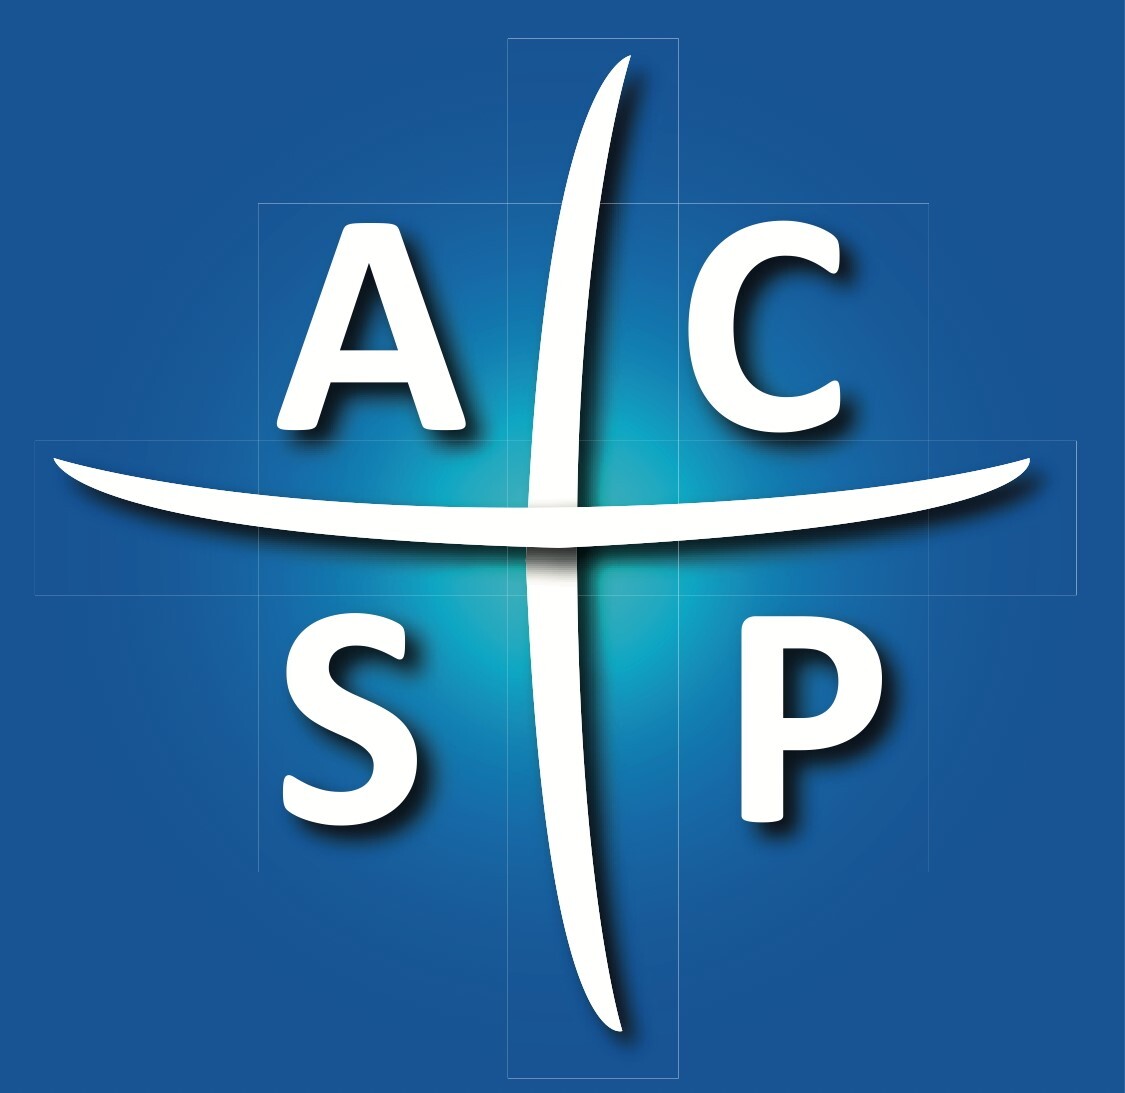 ACSP logo